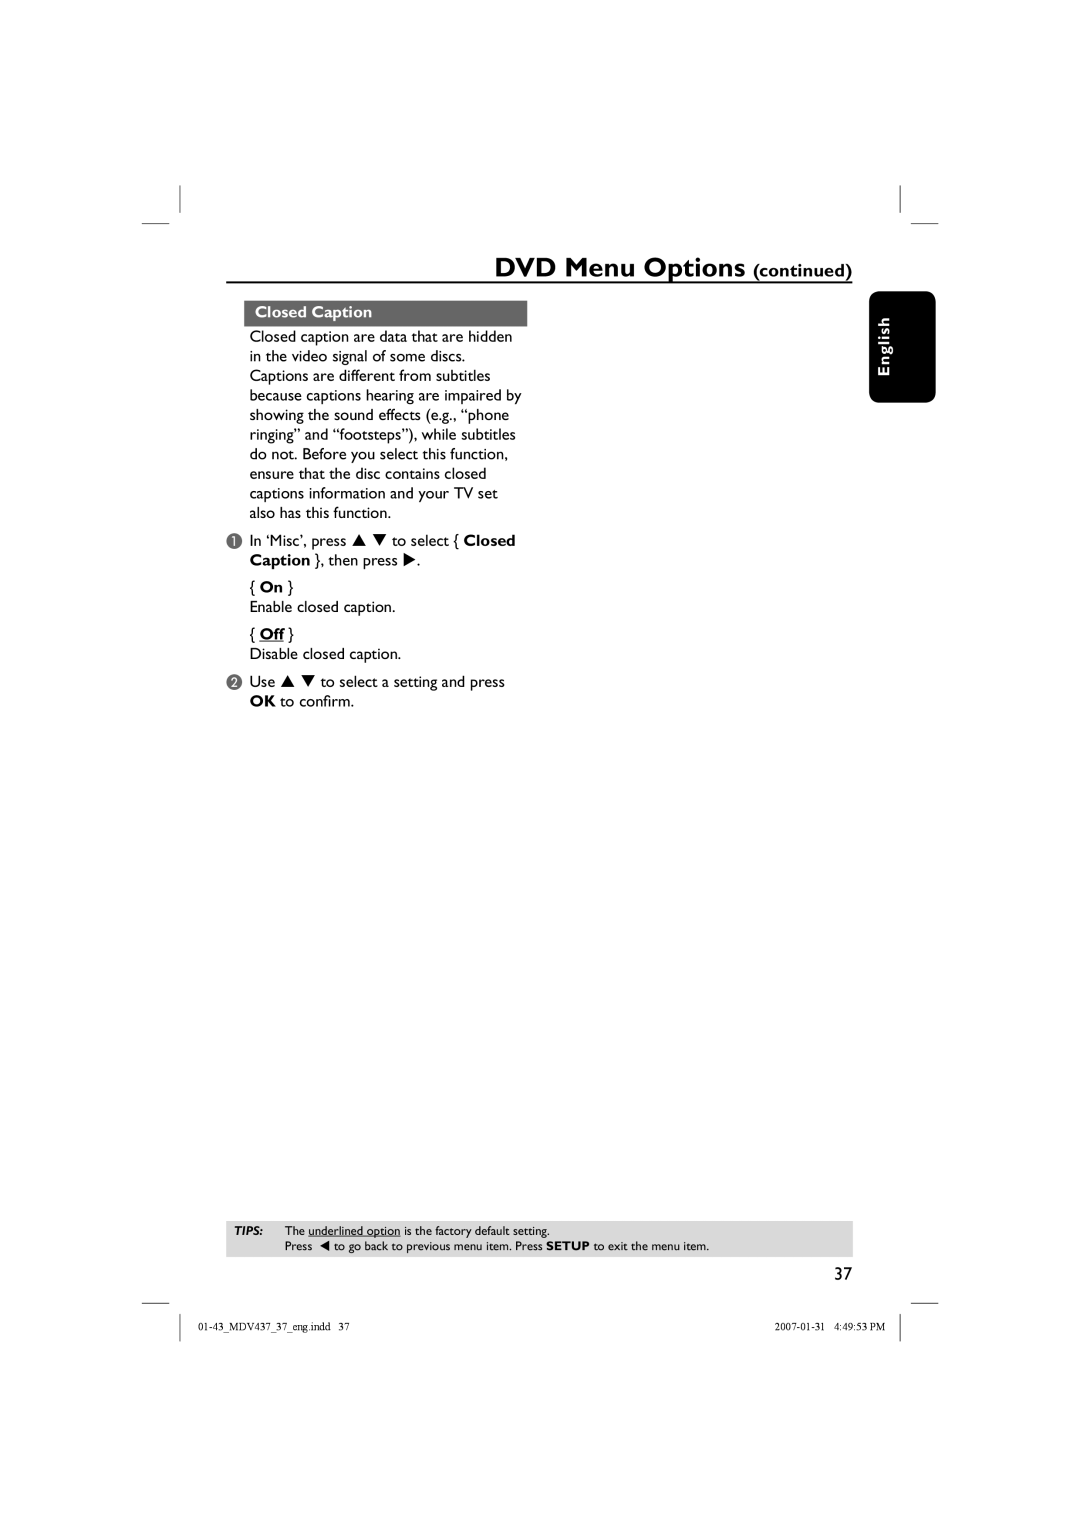 Magnavox MDV437 manual Closed Caption, DVD Menu Options continued, English 